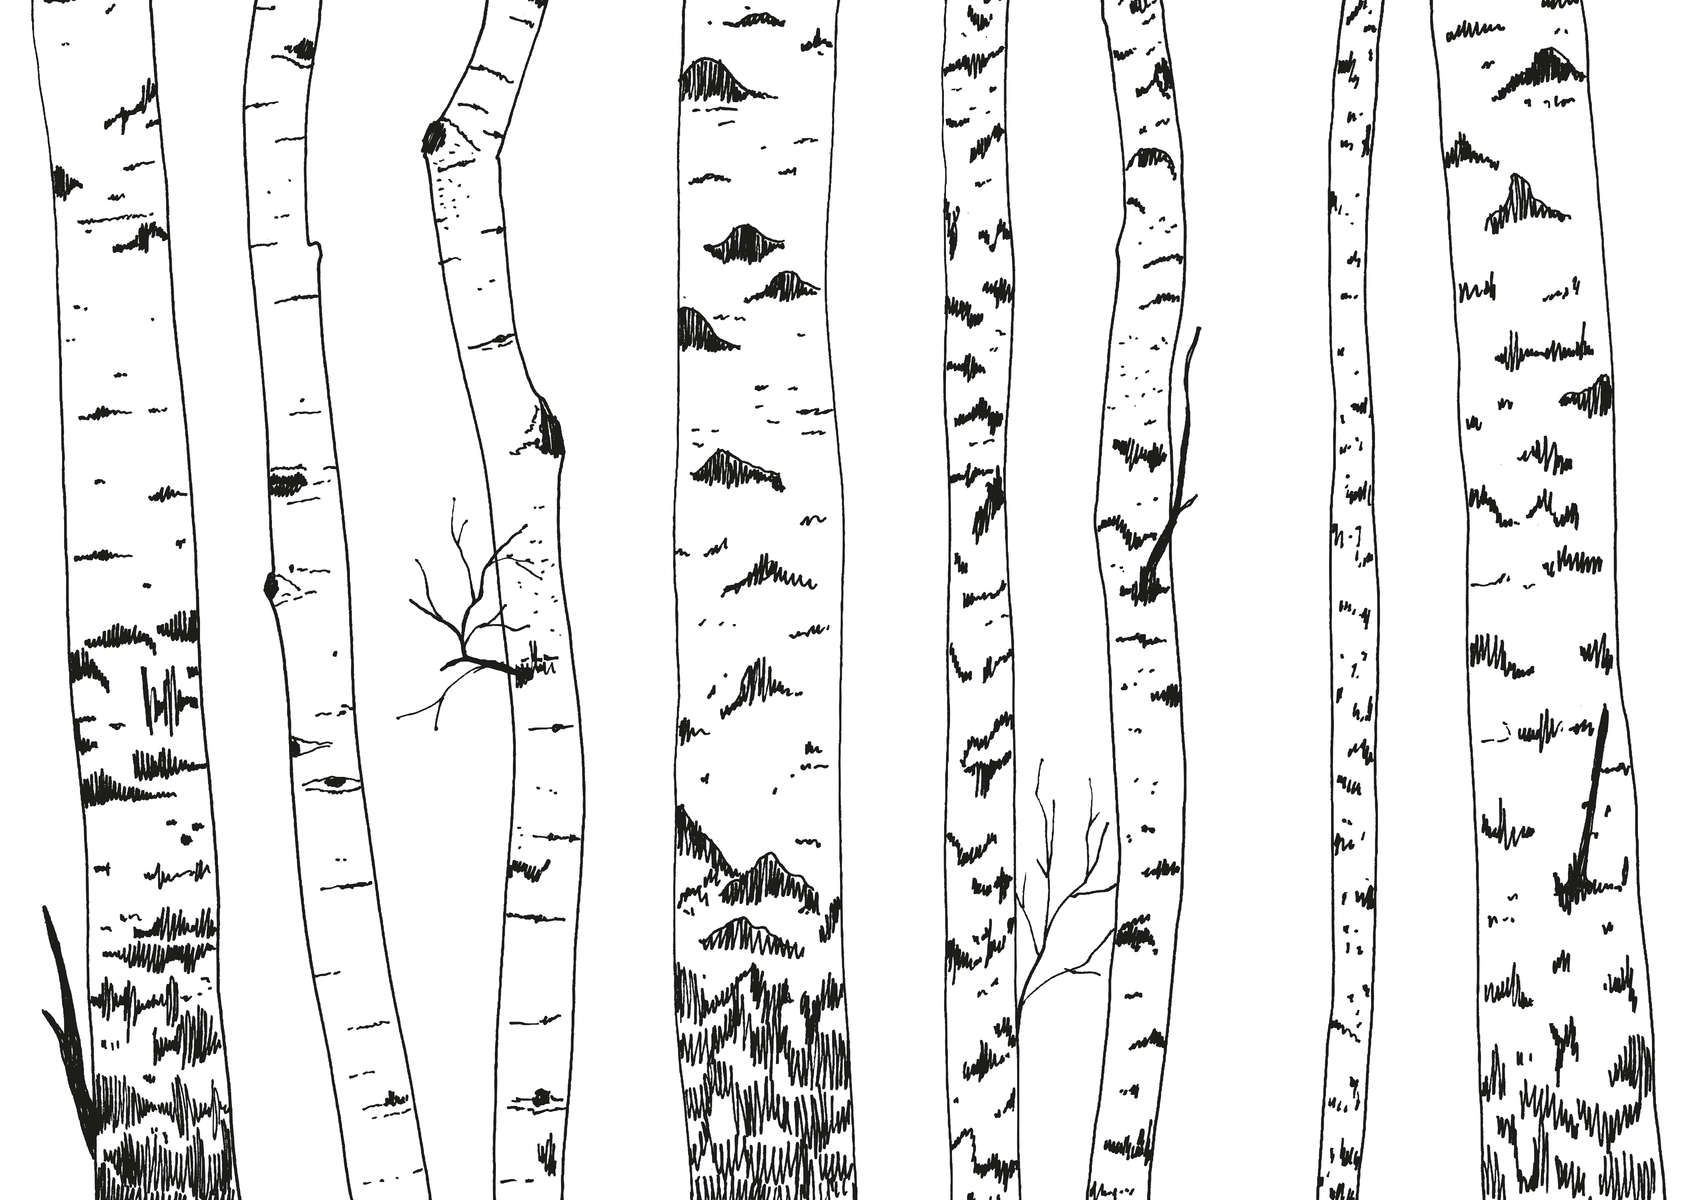             Photo wallpaper drawn birch forest - textured non-woven
        